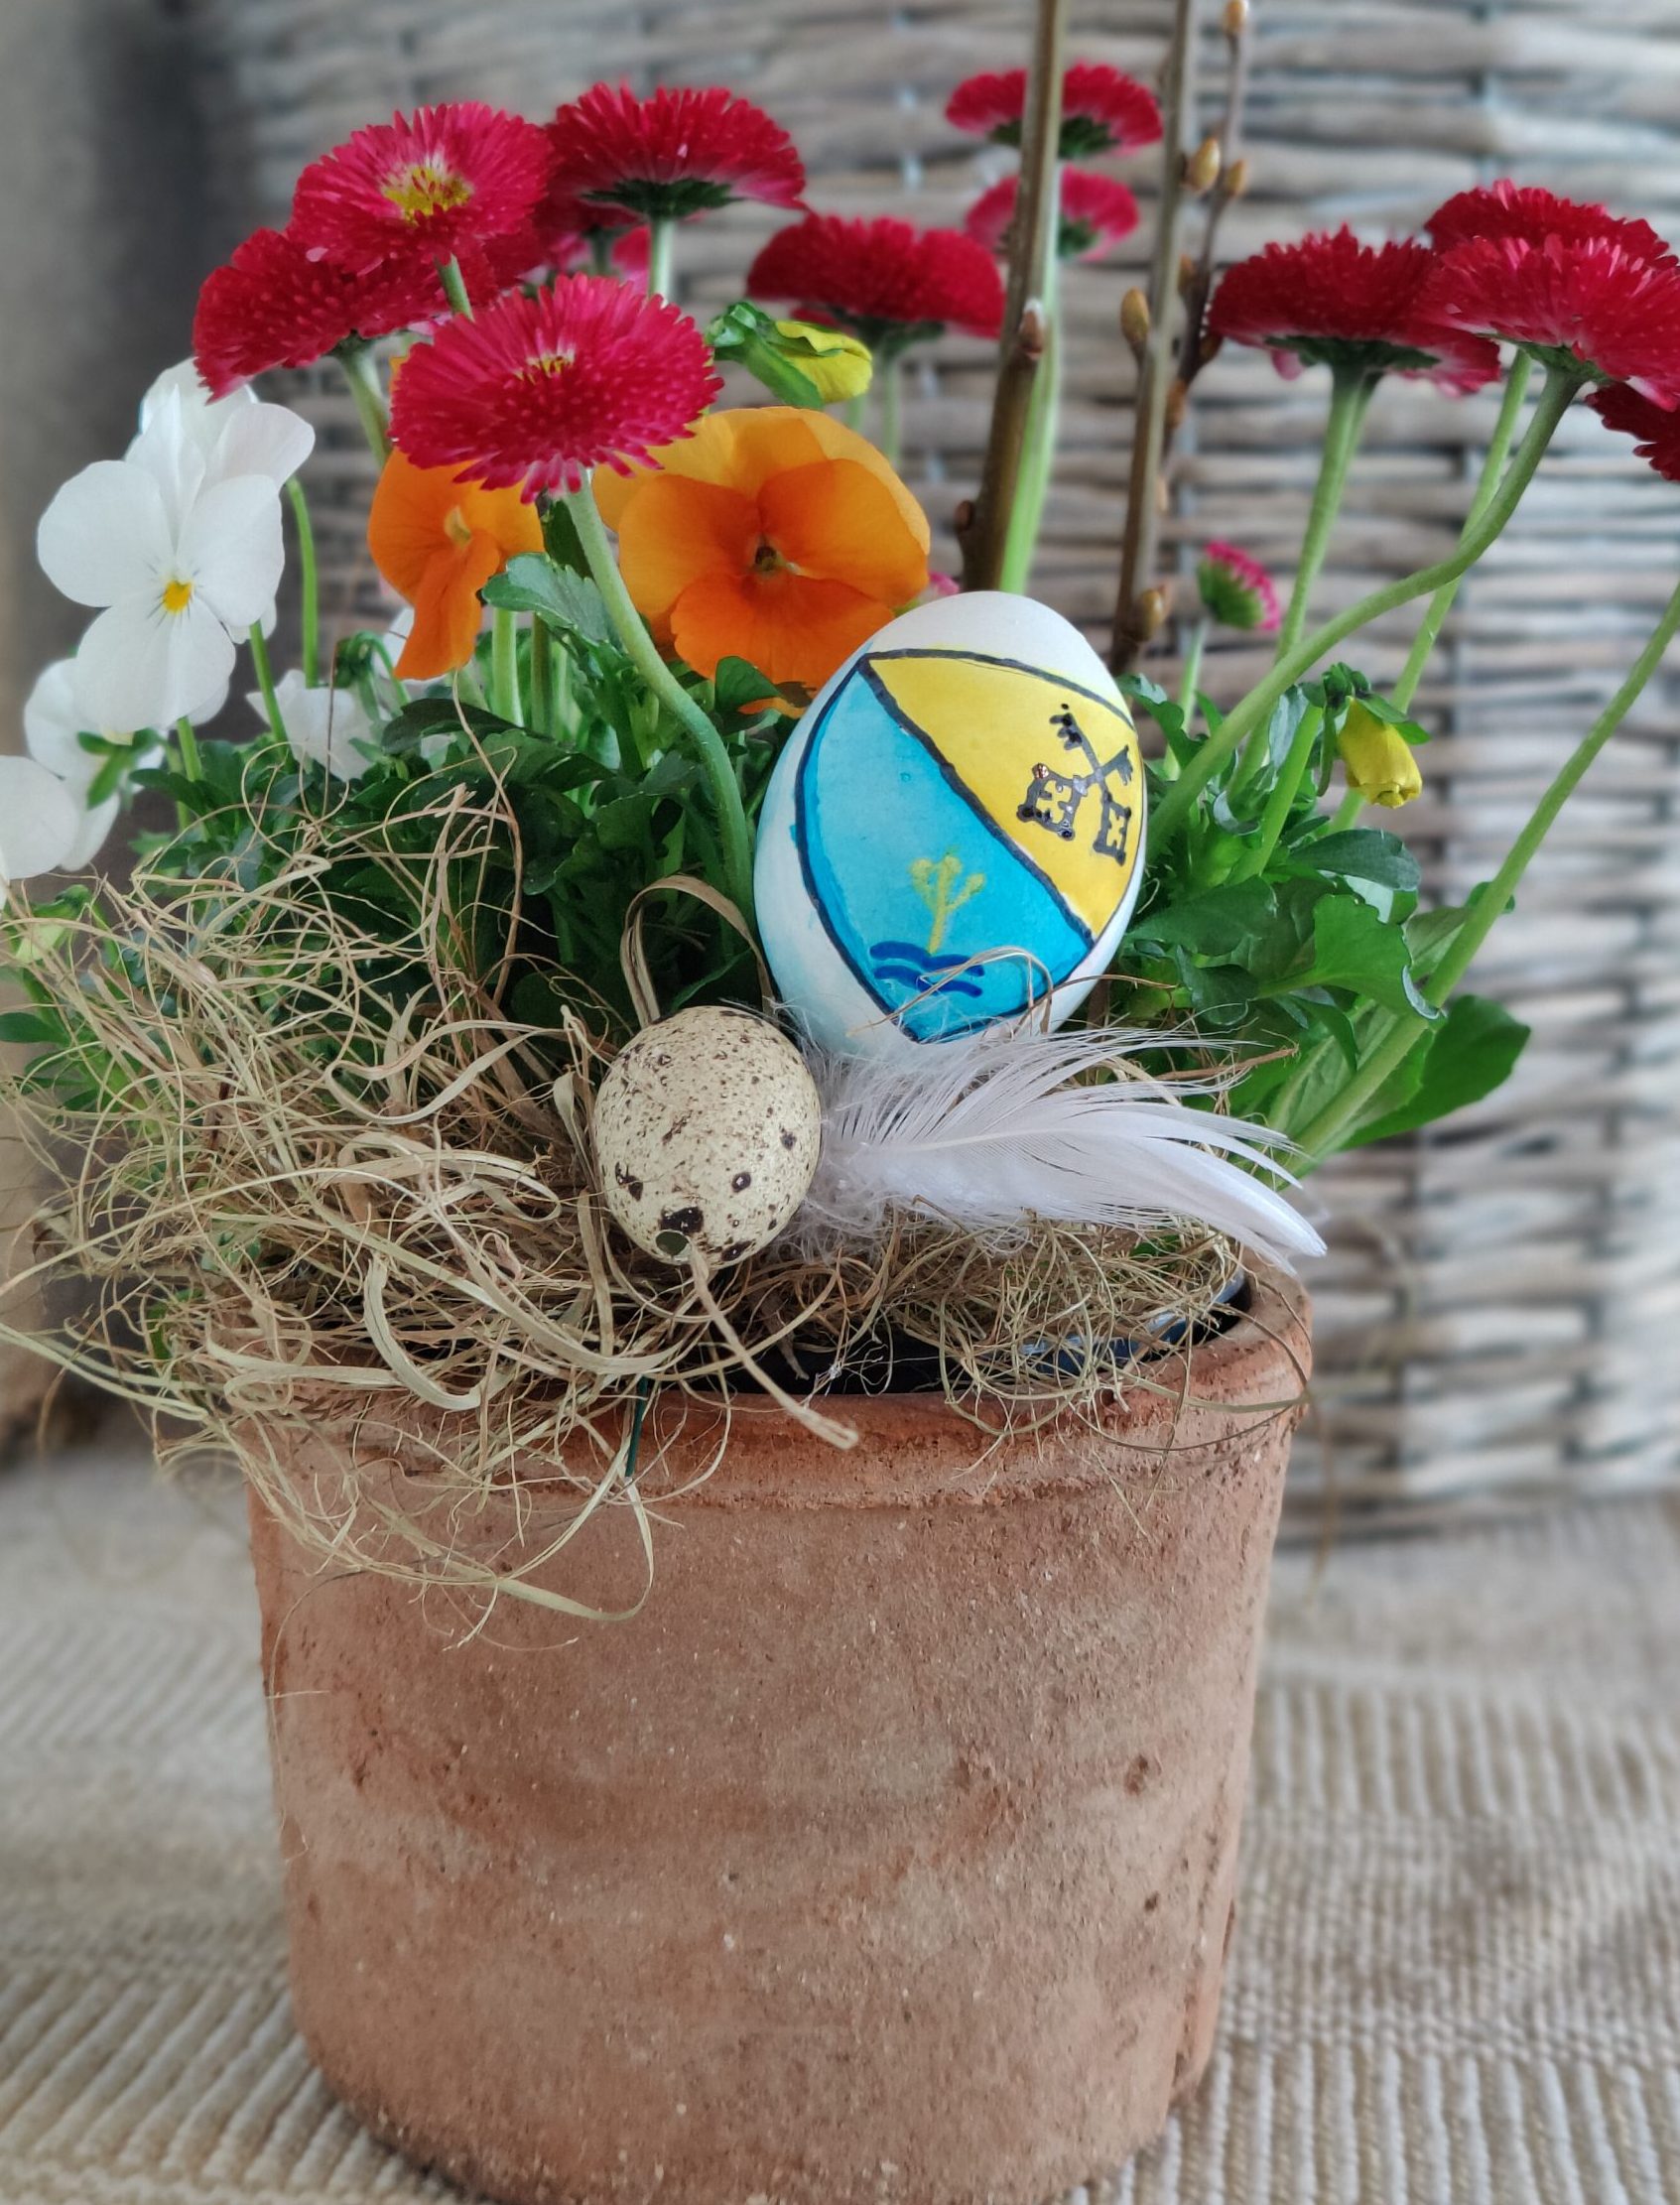 Frohe Ostern – Buona Pasqua